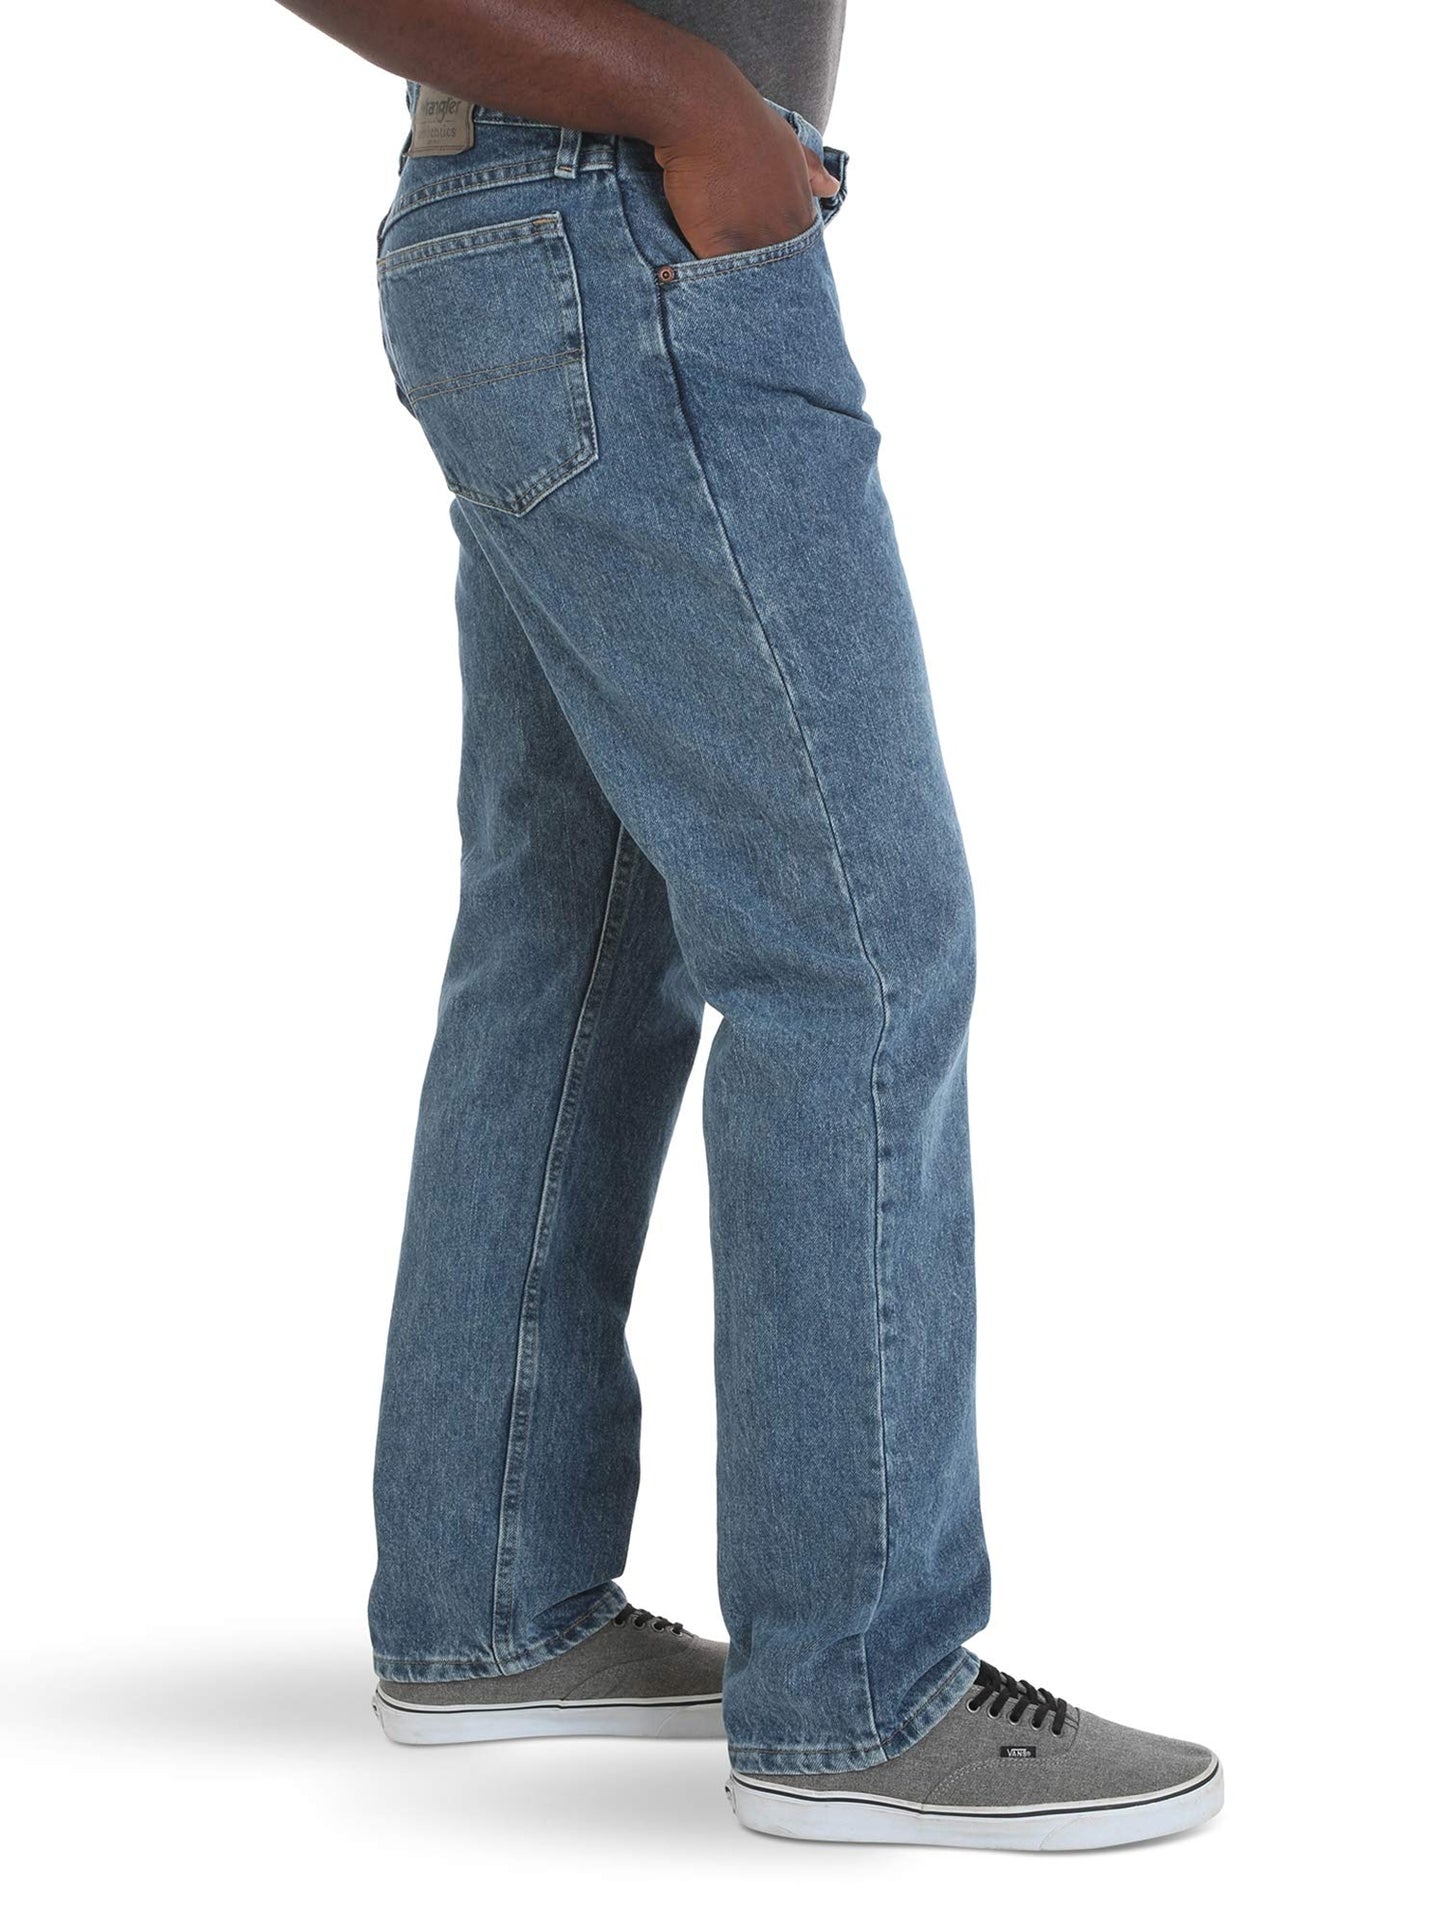 Wrangler Authentics Men's Big & Tall Classic 5-Pocket Relaxed Fit Cotton Jean, Vintage Stonewash, 38W x 36L